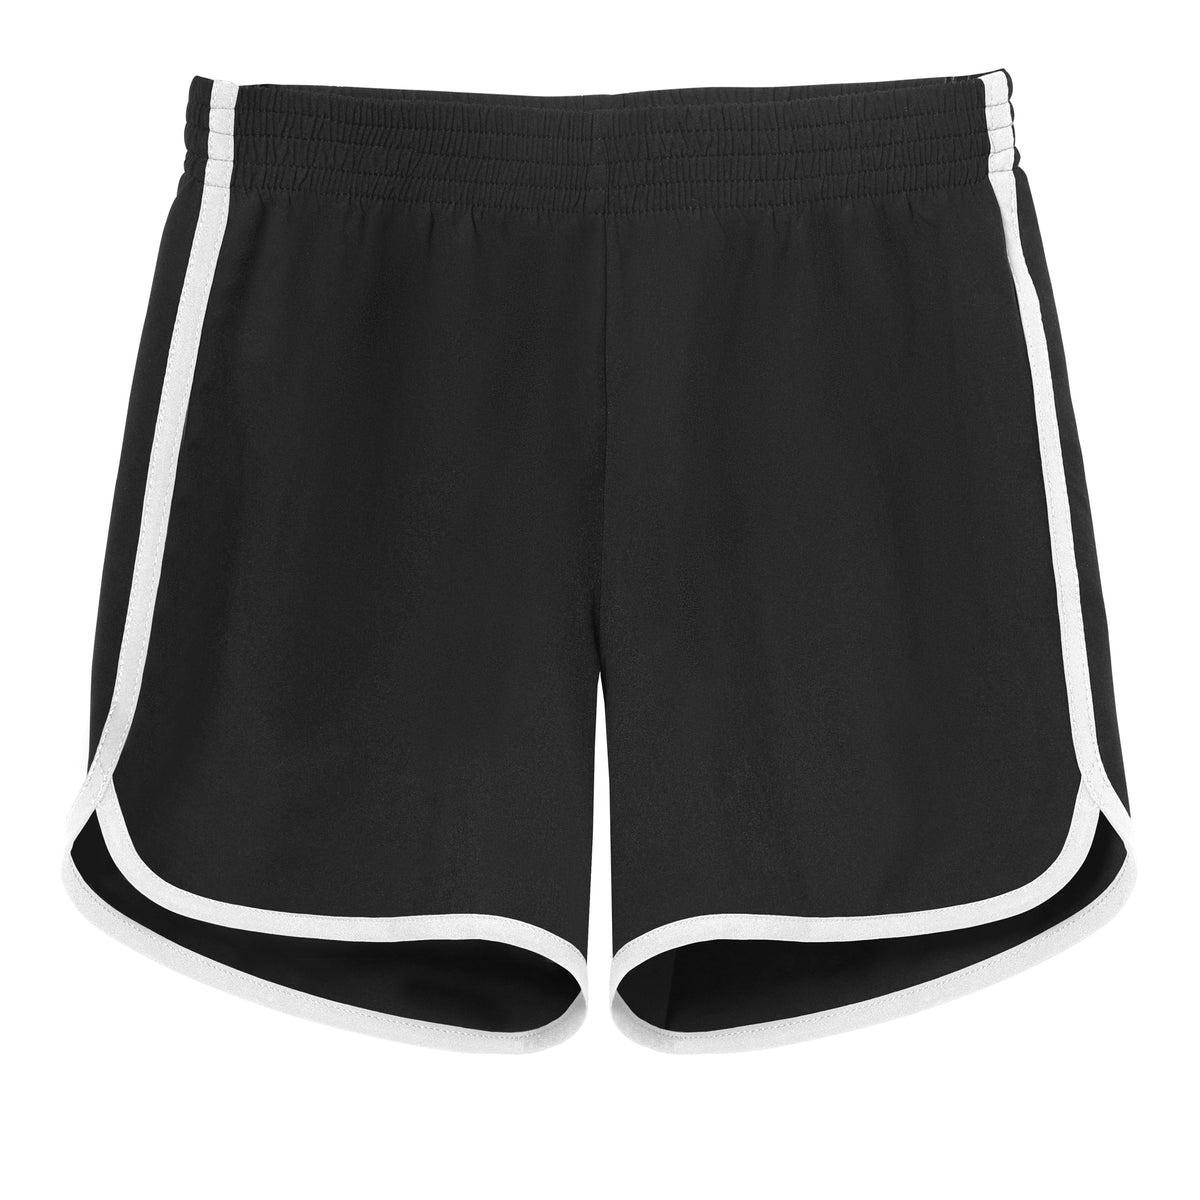 Boys UPF 50+ Classic Surf Style Boys Swim Shorts - Mid-Thigh Length | Black w/ White